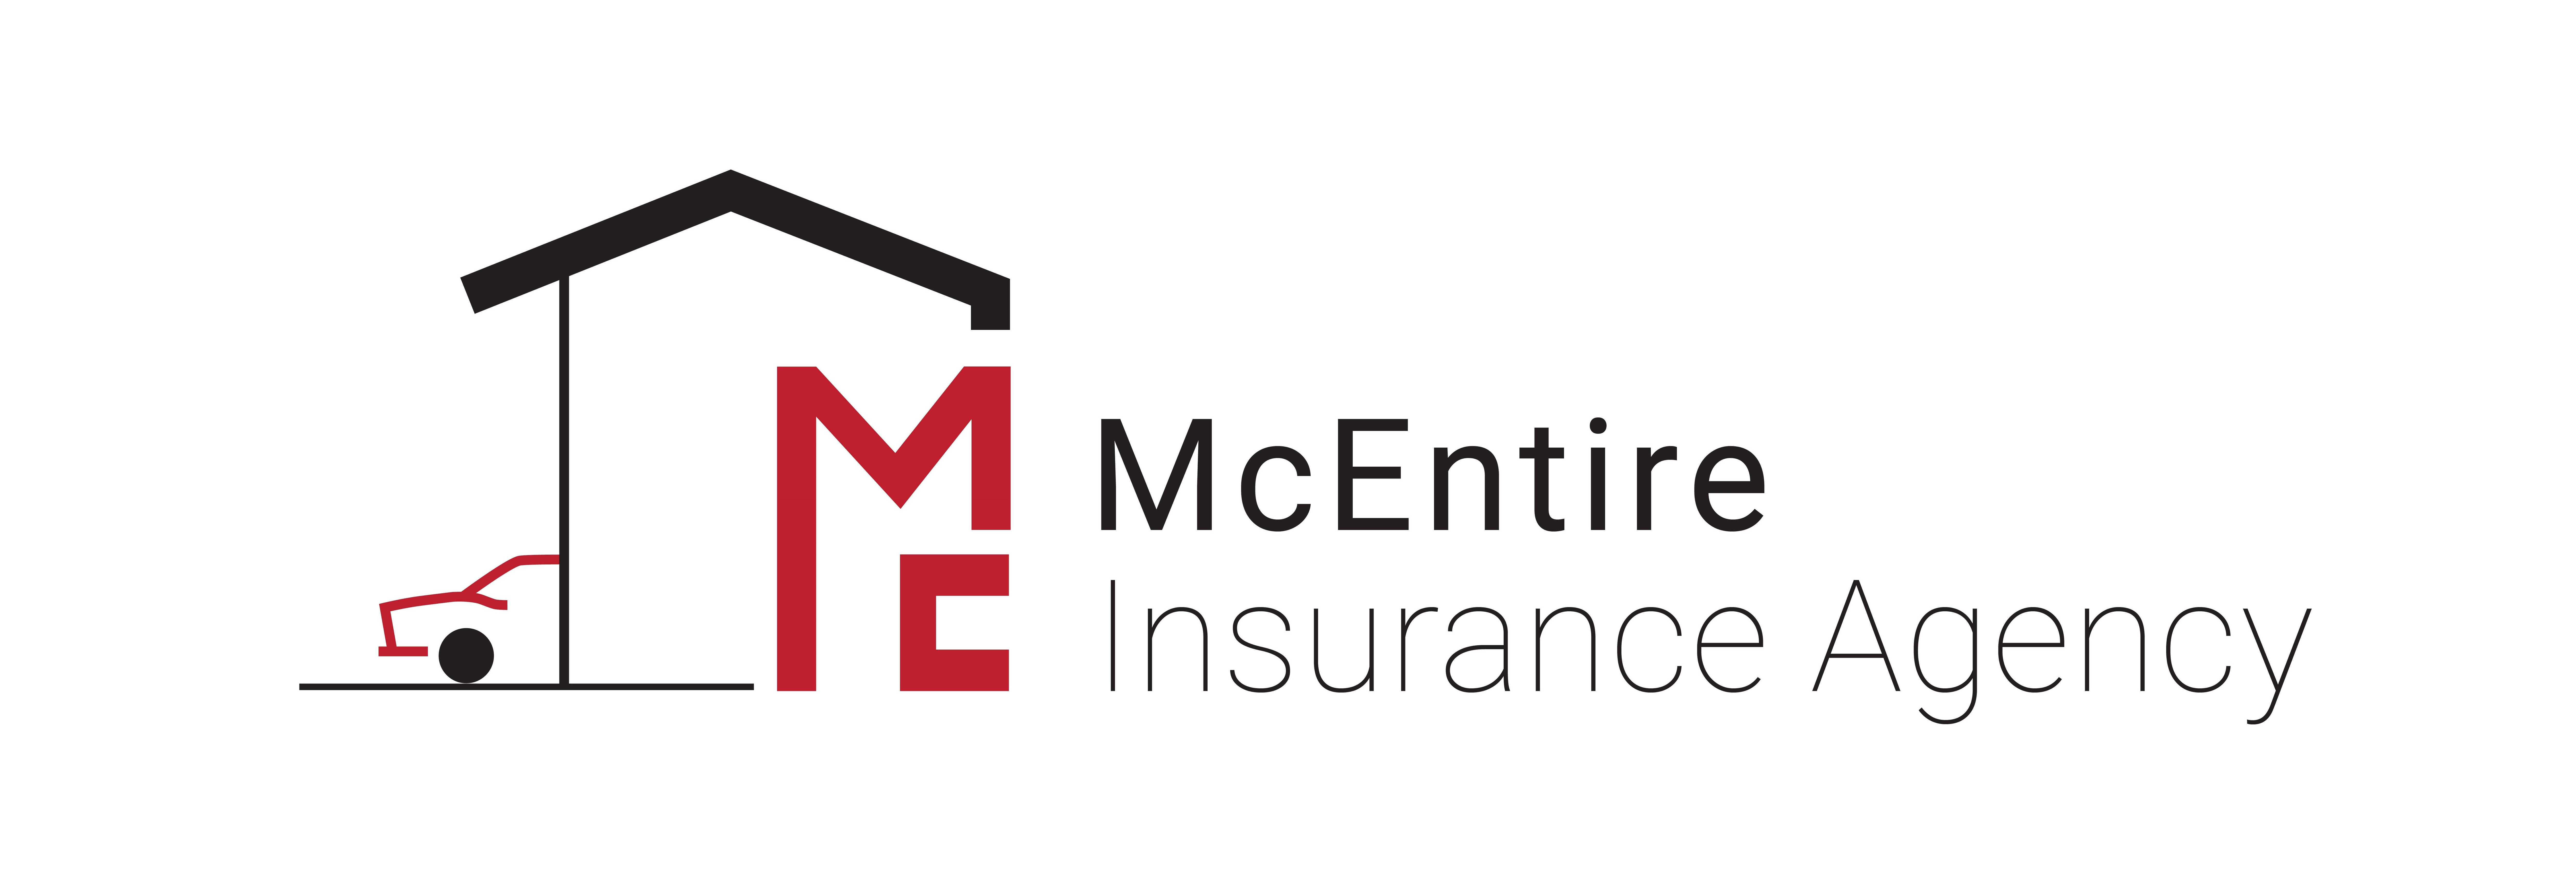 McEntire Insurance Agency Logo